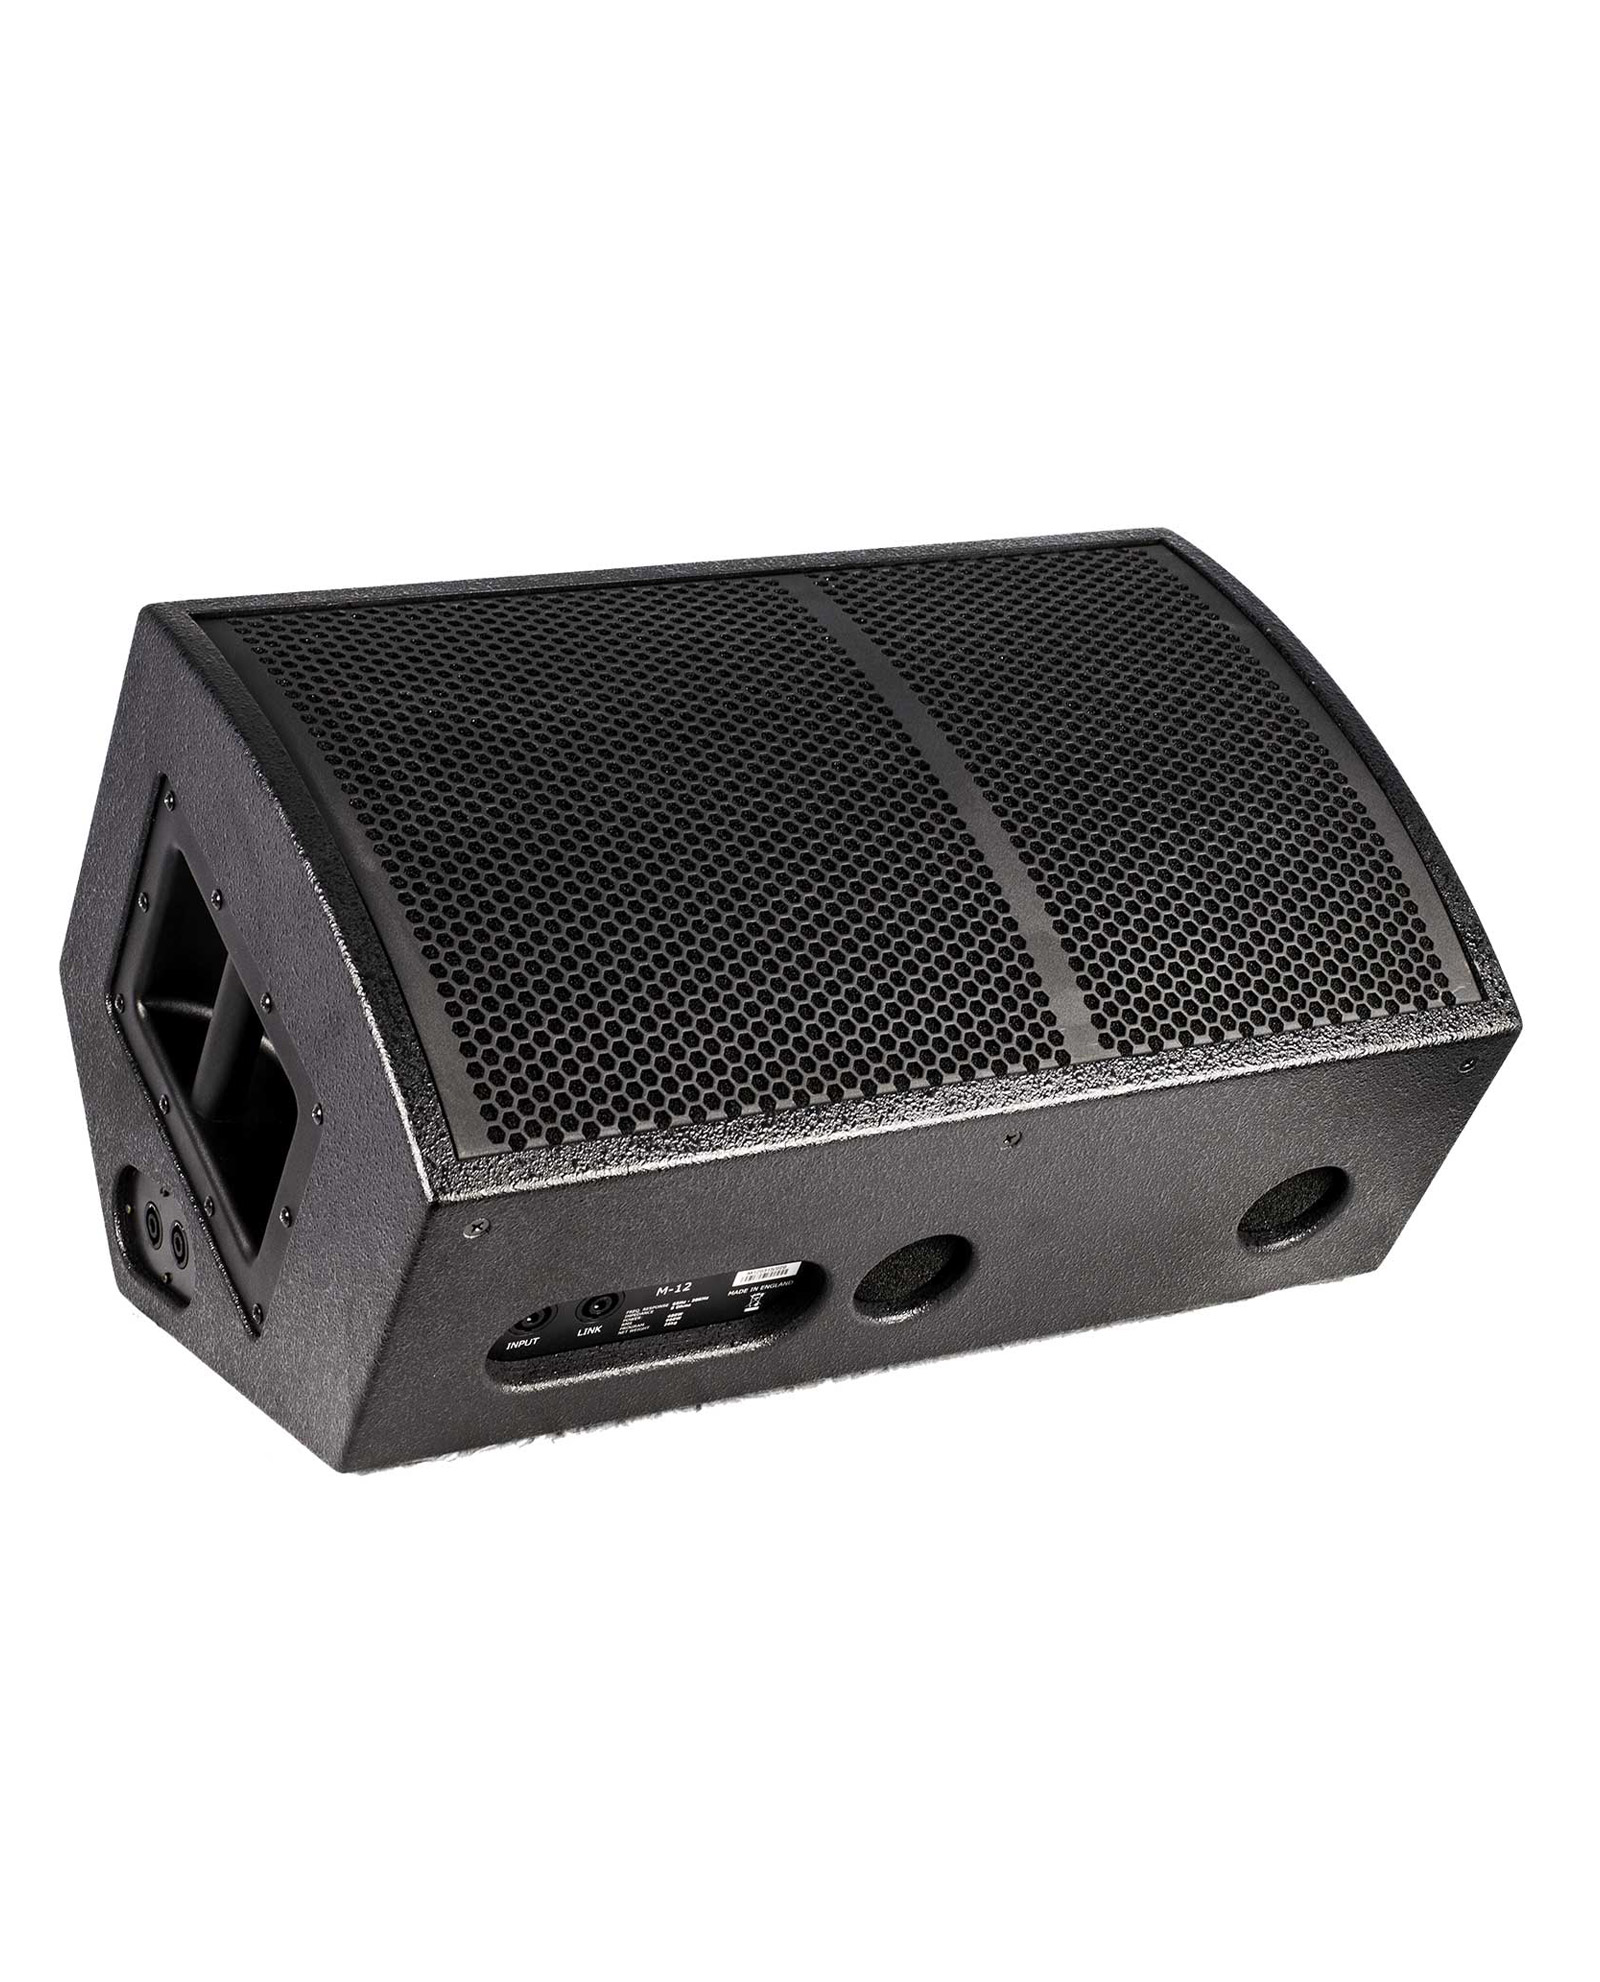 https://www.showtechnix.co.nz/wp-content/uploads/2014/02/EM-Acoustics-M-12-Speaker.jpg